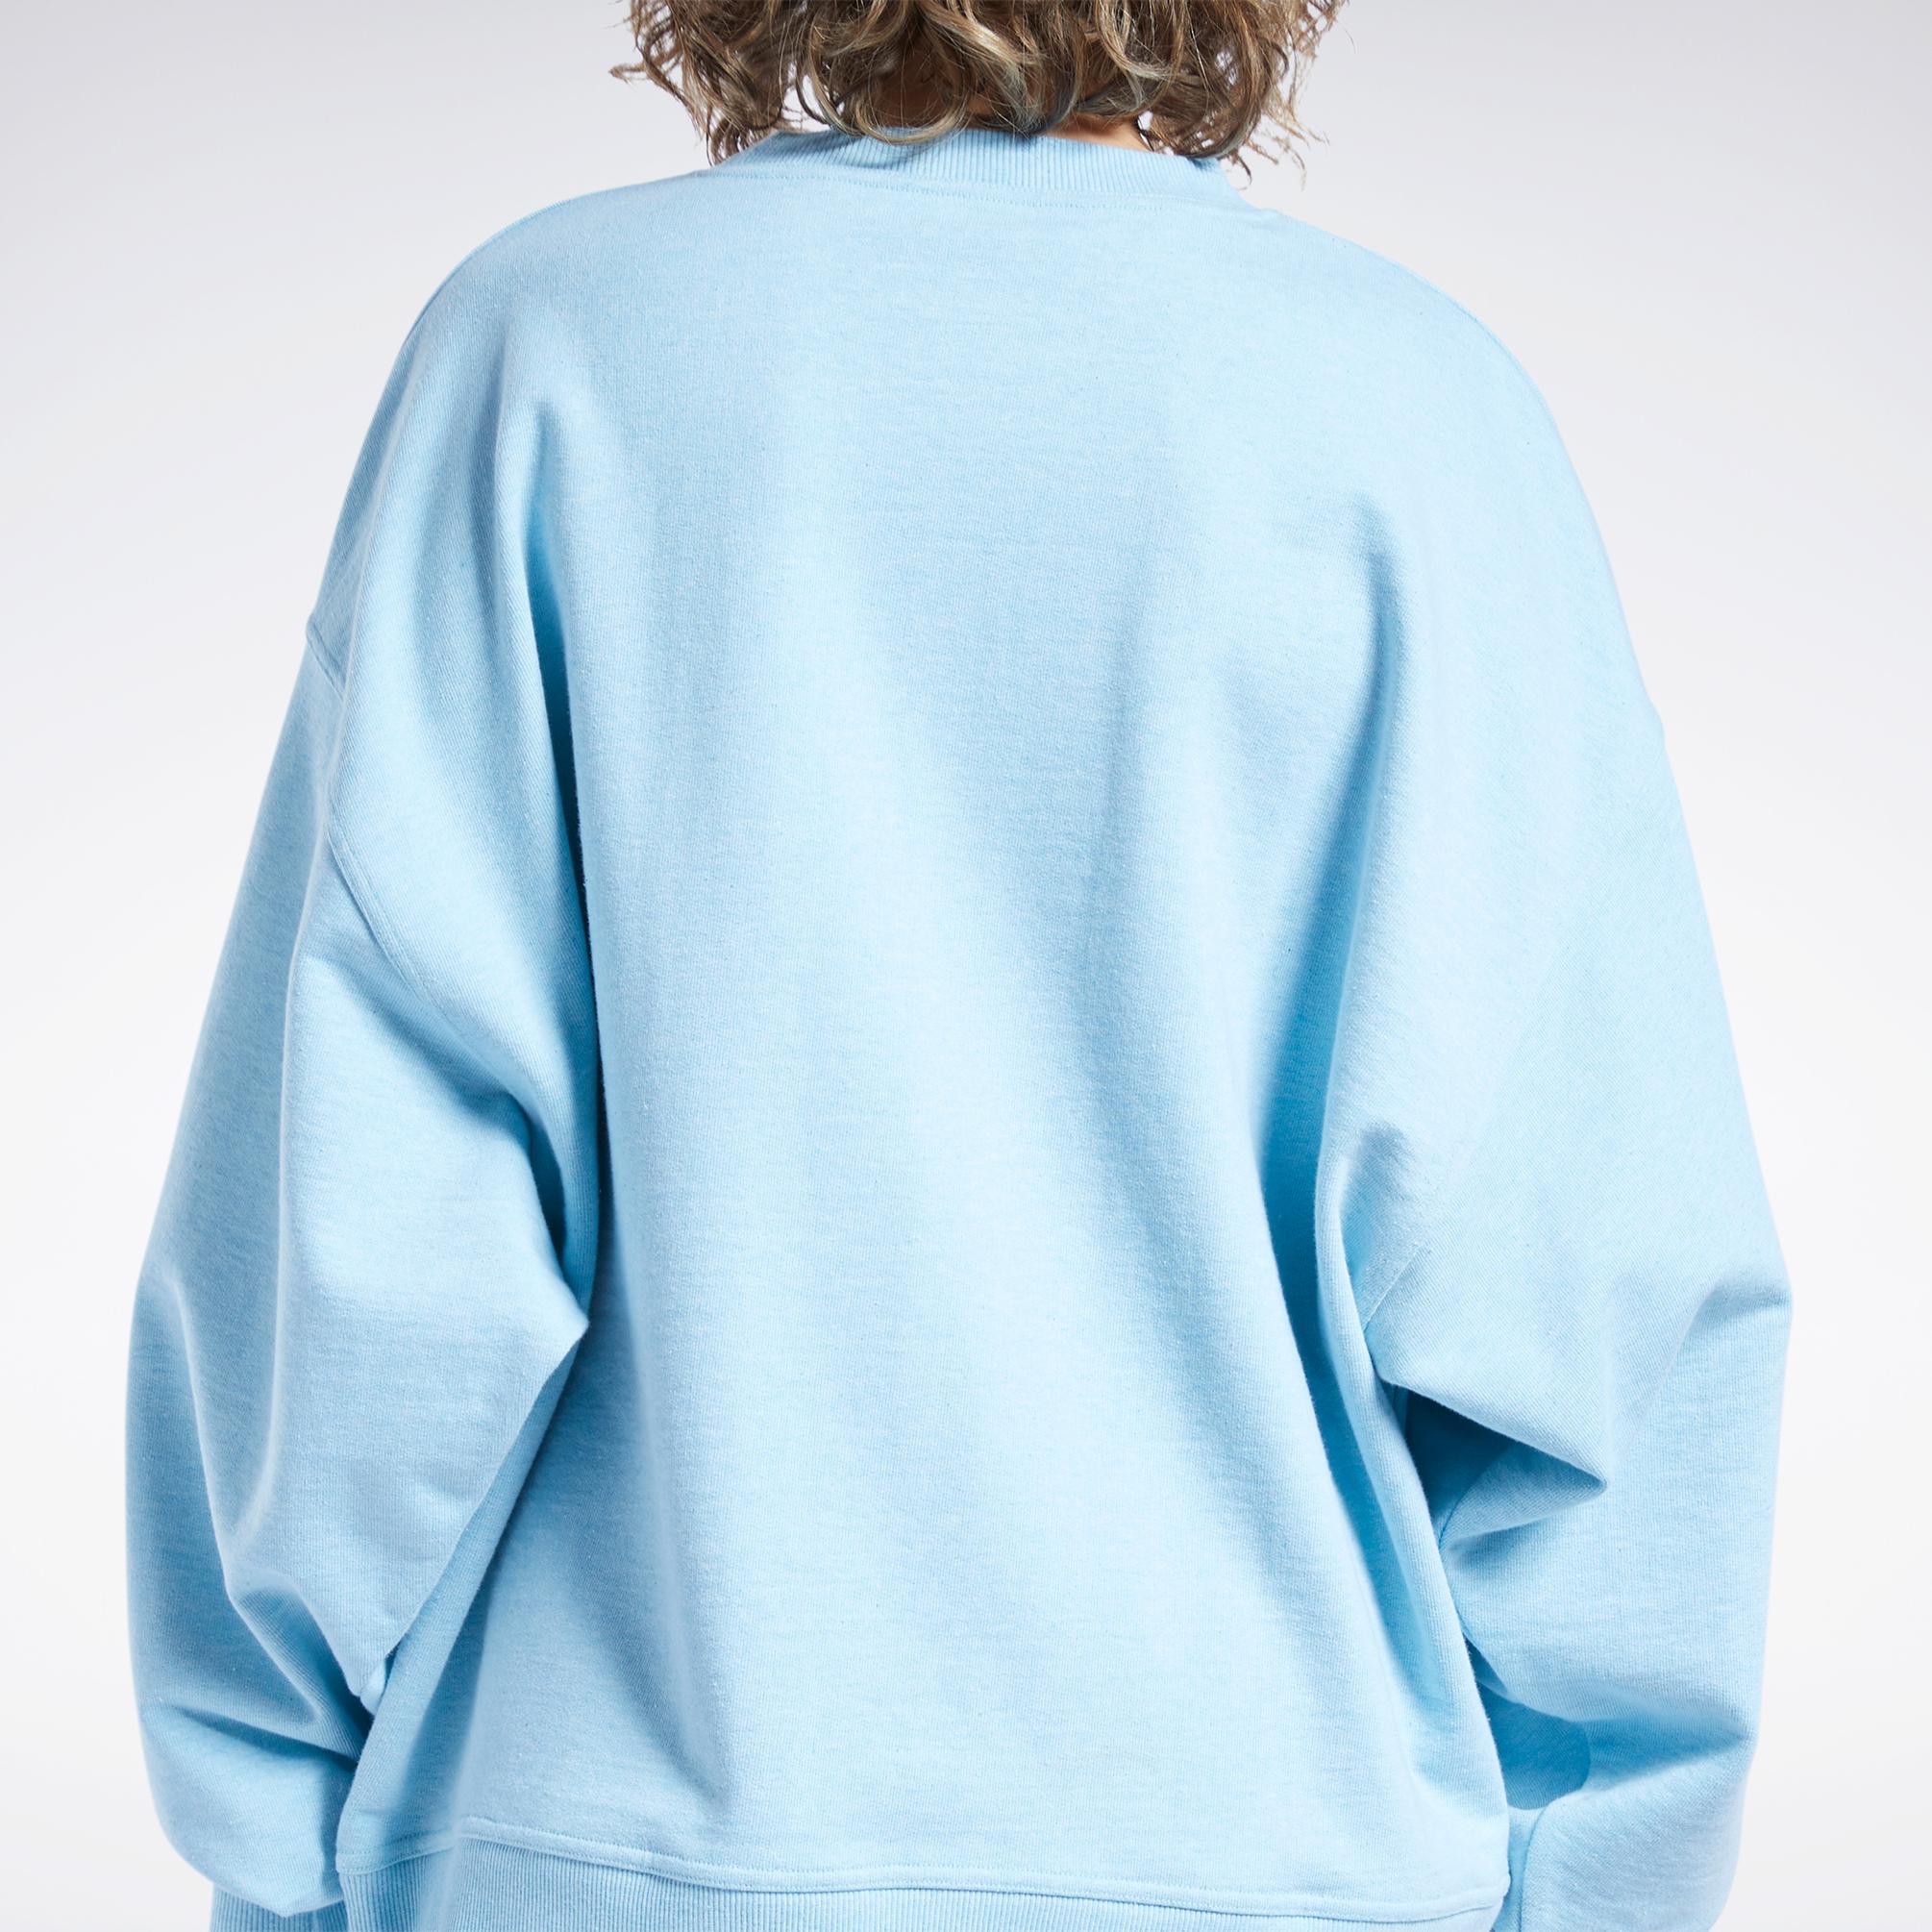  Reebok Madwomen Kadın Mavi Sweatshirt